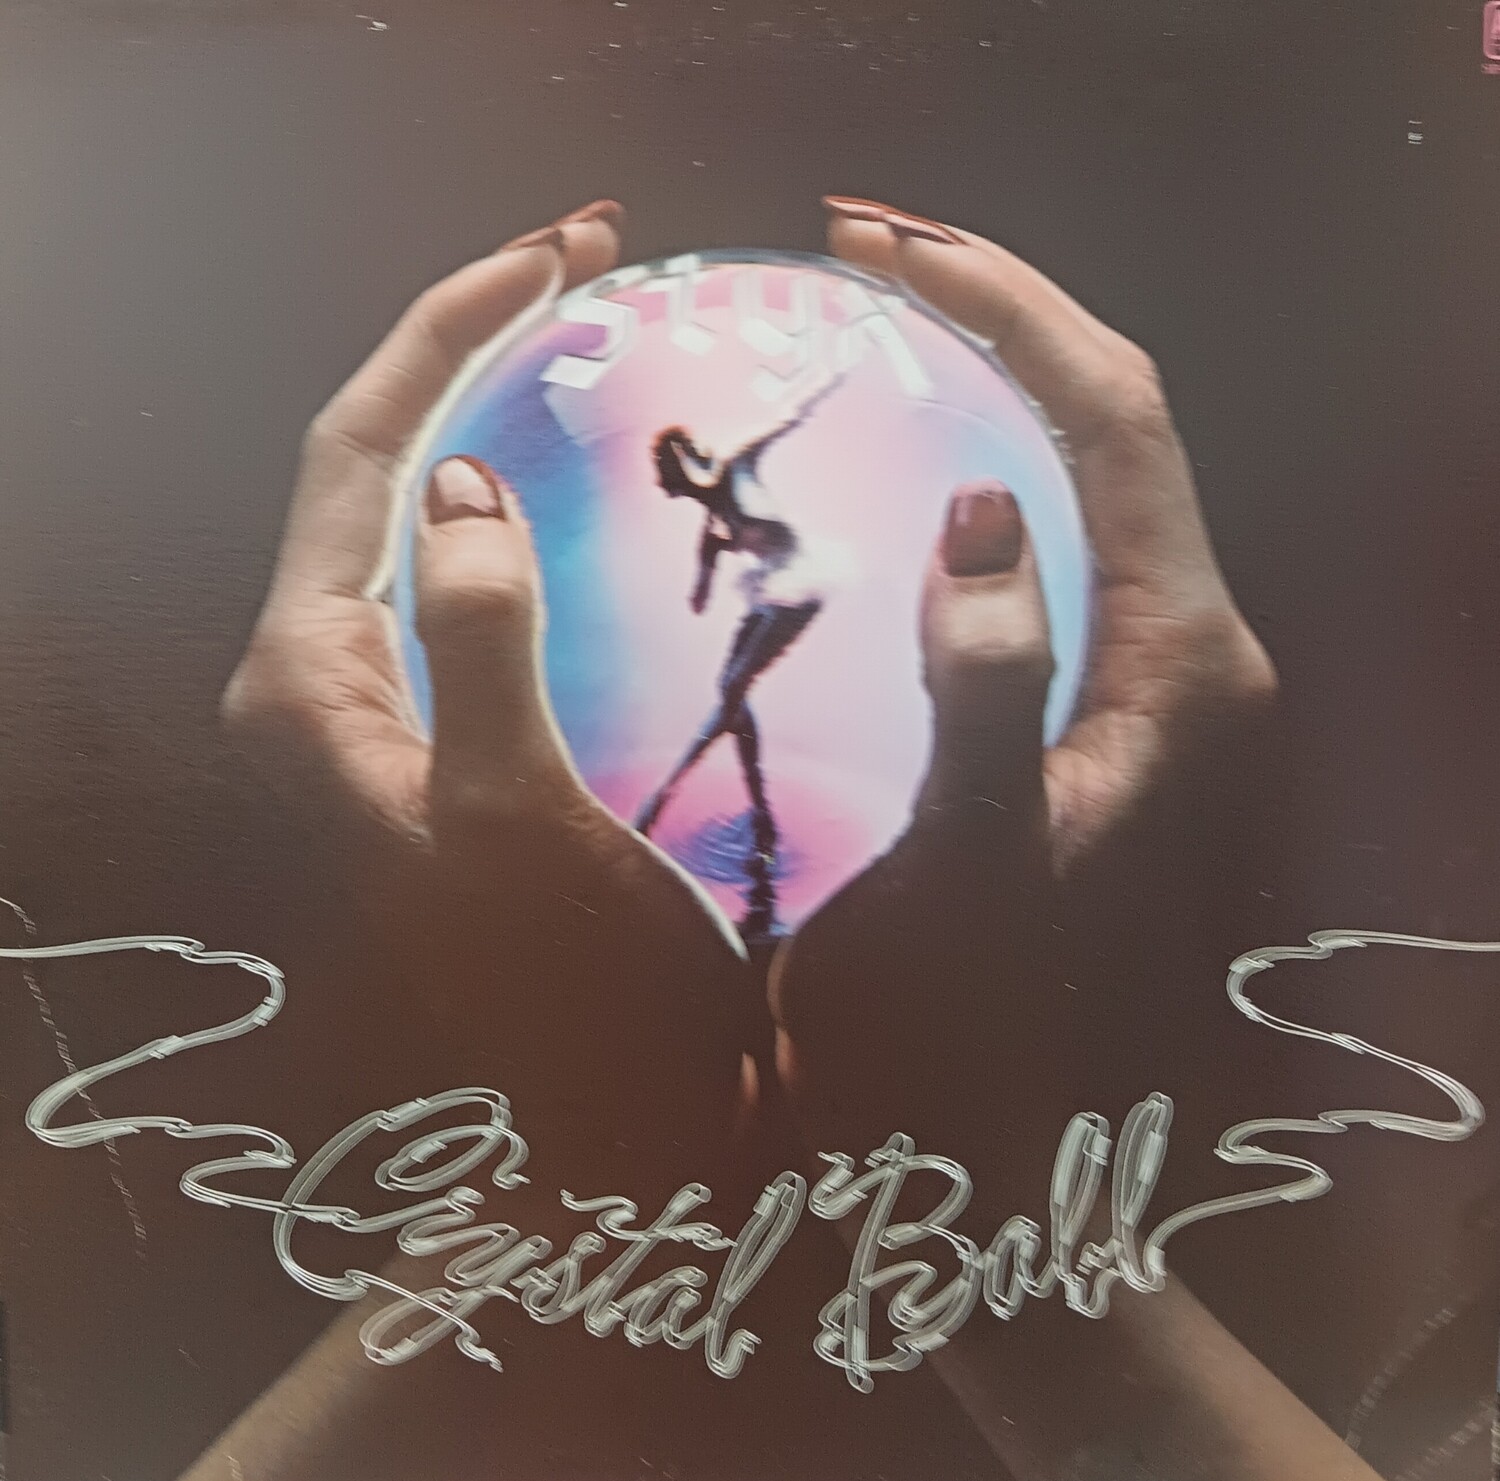 STYX - Crystal Ball